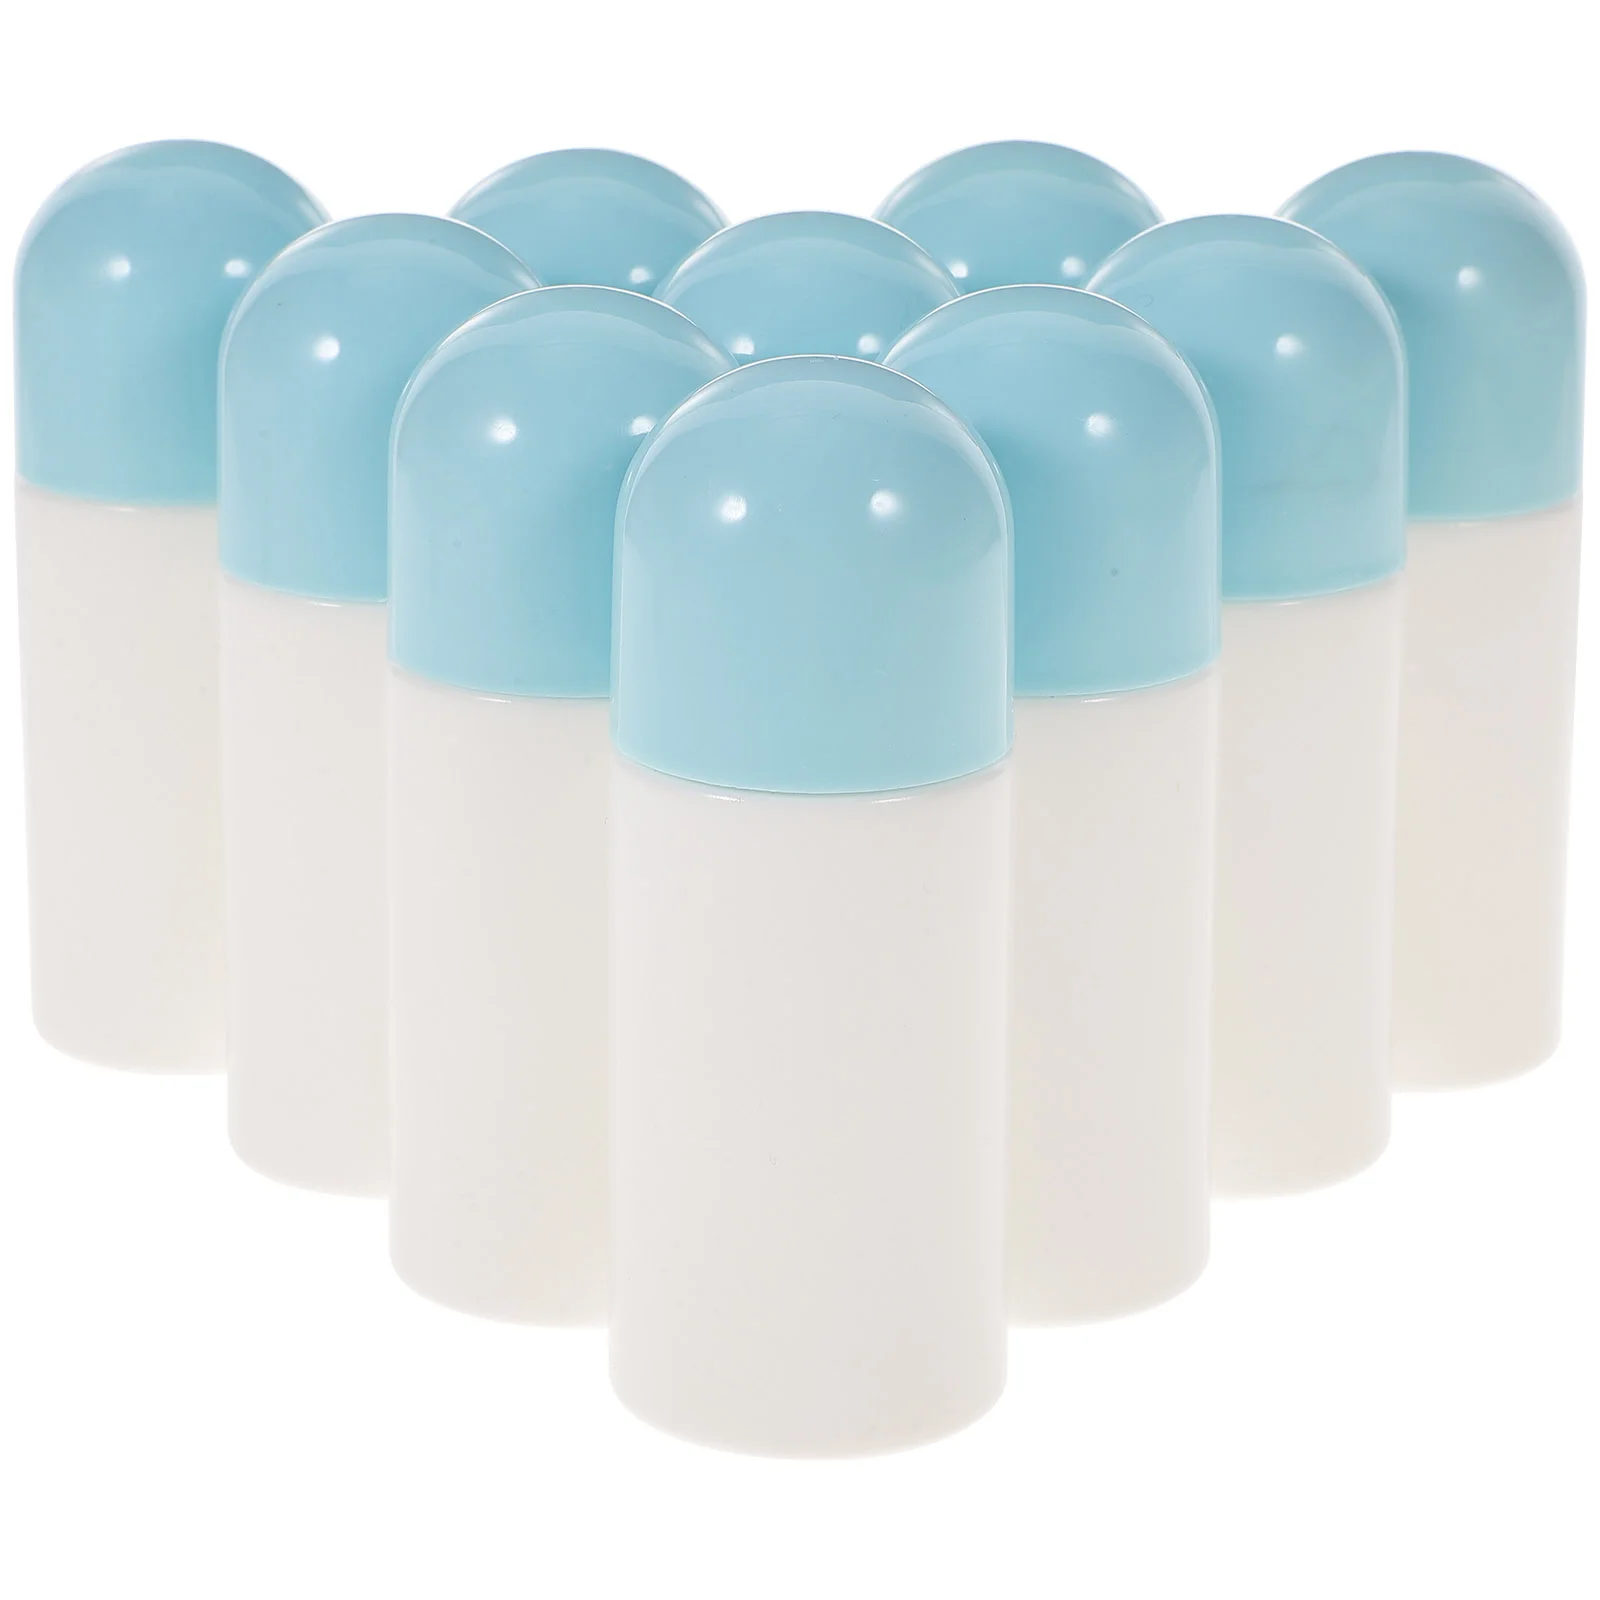 

10 Pcs Sponge Liniment Bottle Plastic Containers Sub Package Daub Bottles Travel Medicine Perfume Head